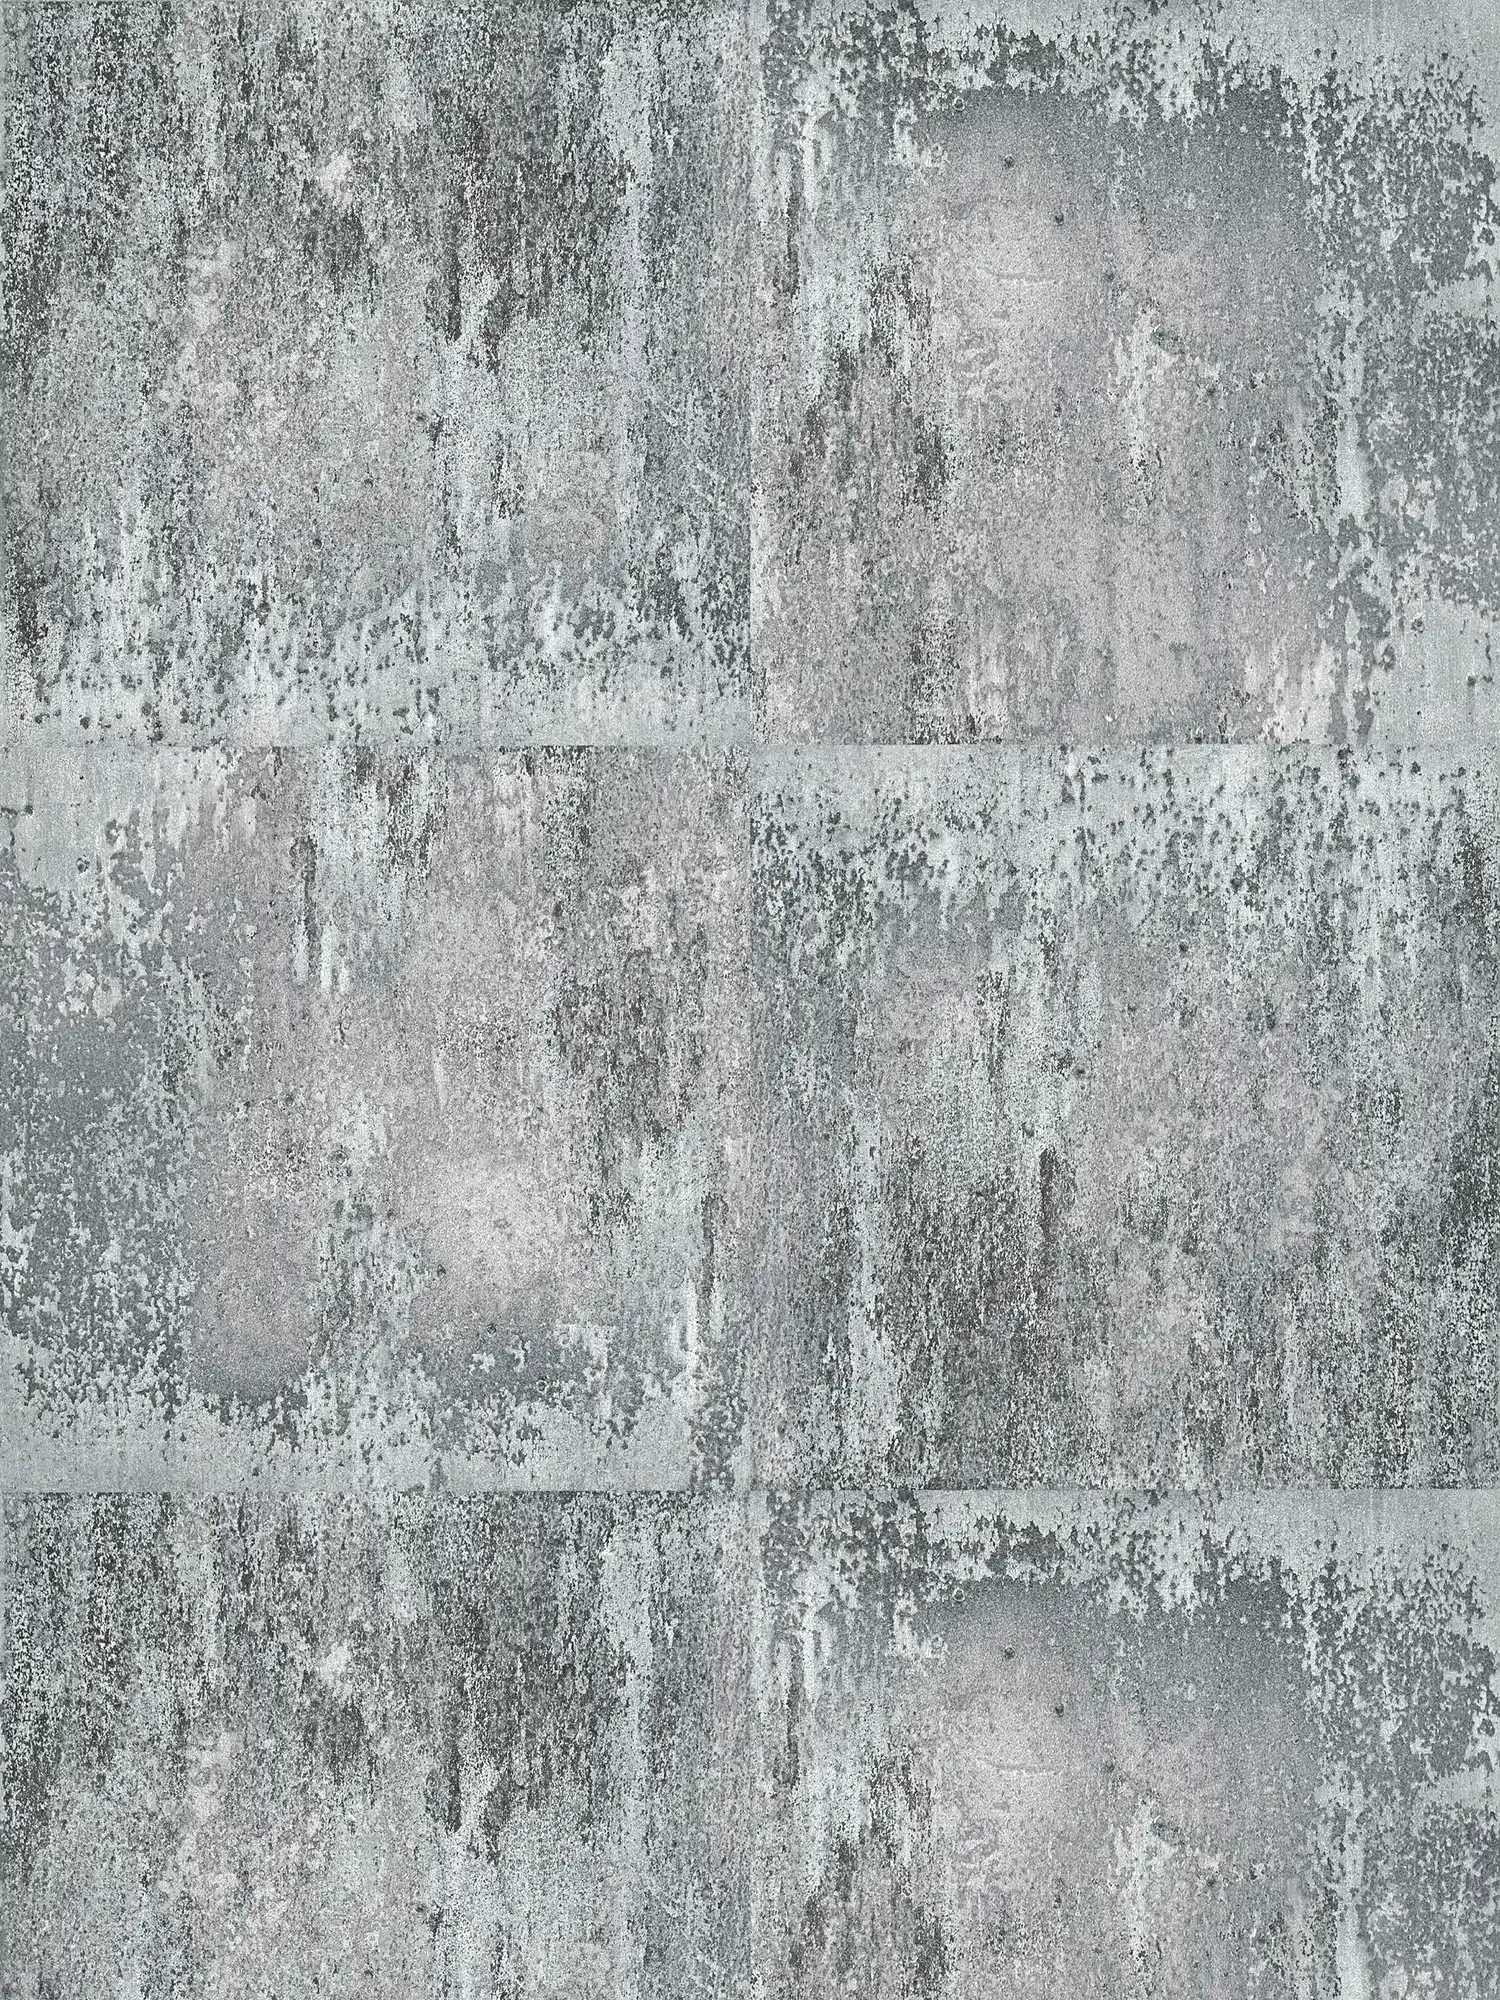 Wallpaper with rustic metal look & rough pattern - grey, black, silver
